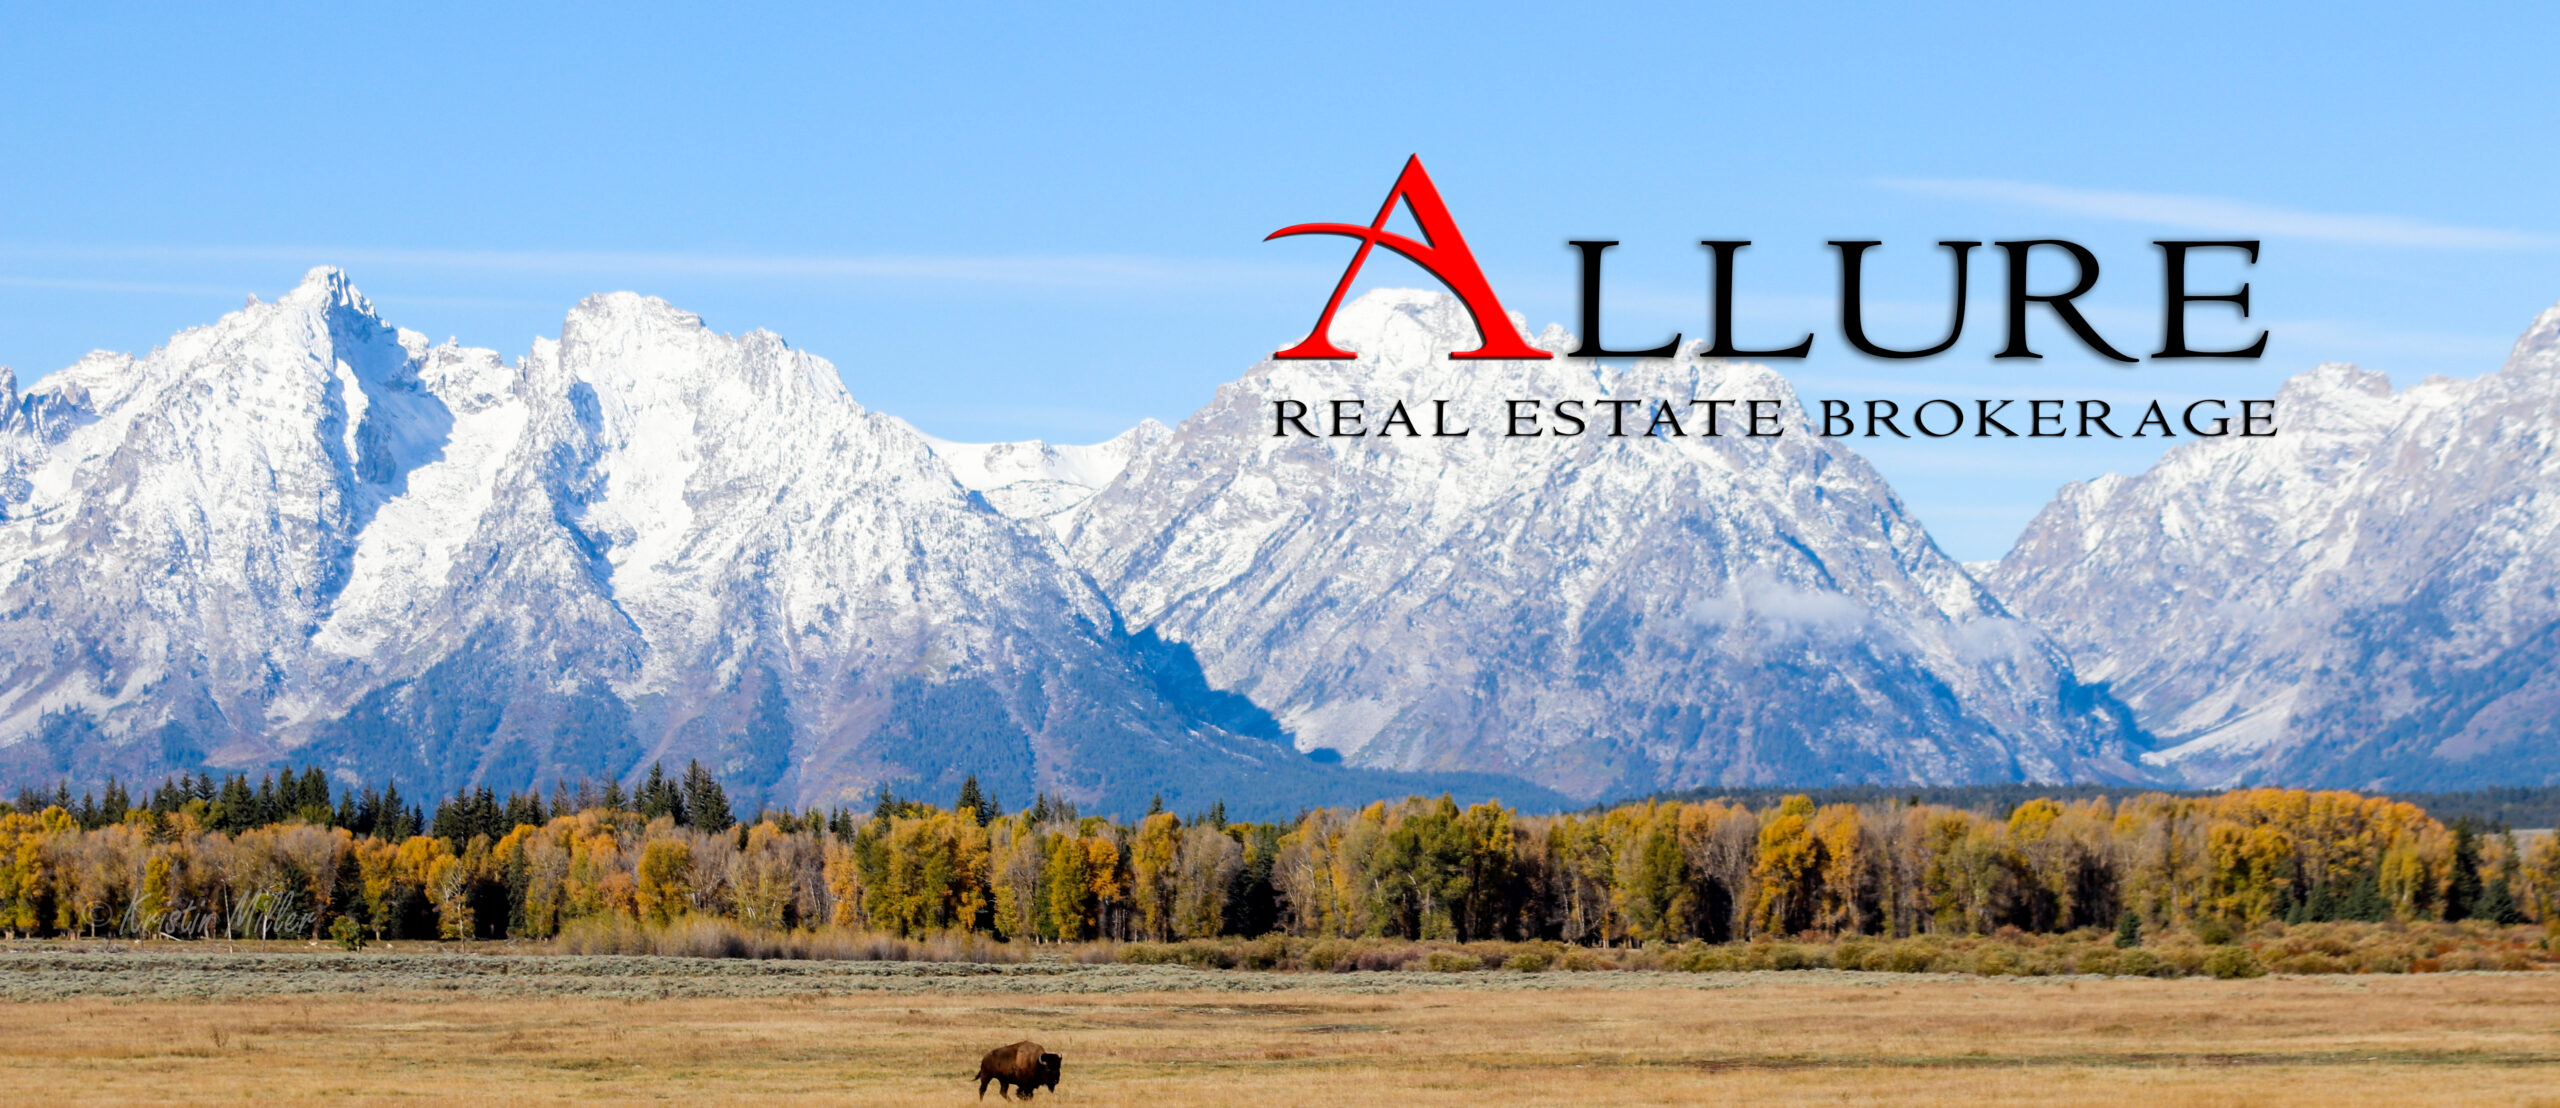 Wyoming real estate tax benefits